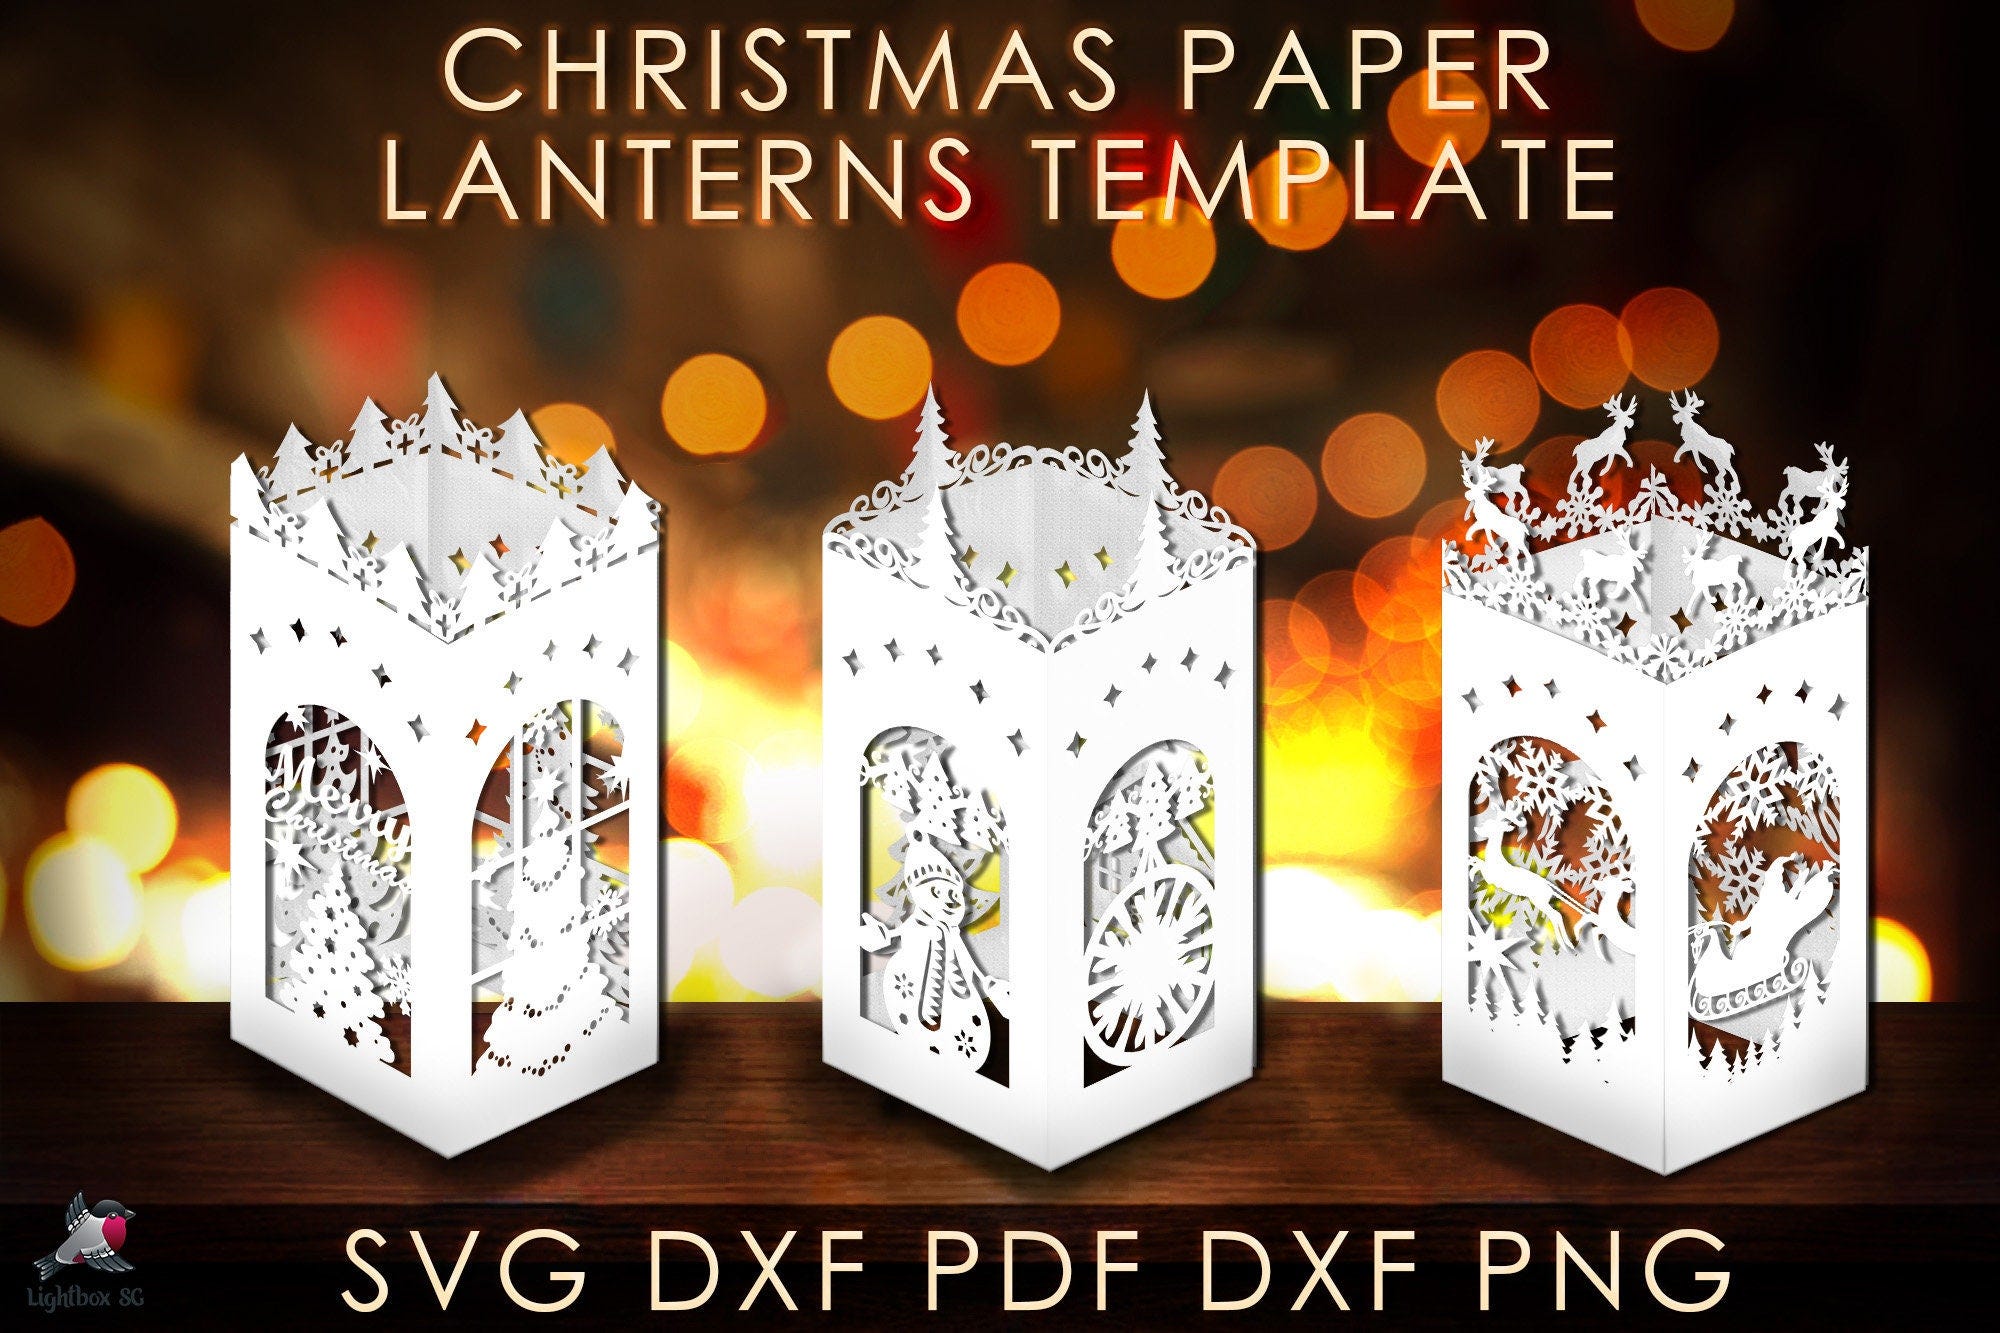 Merry Christmas lantern Template, Happy New Year paper cut diy lantern papercraft, X-mas candles template, cricut svg eps dxf art